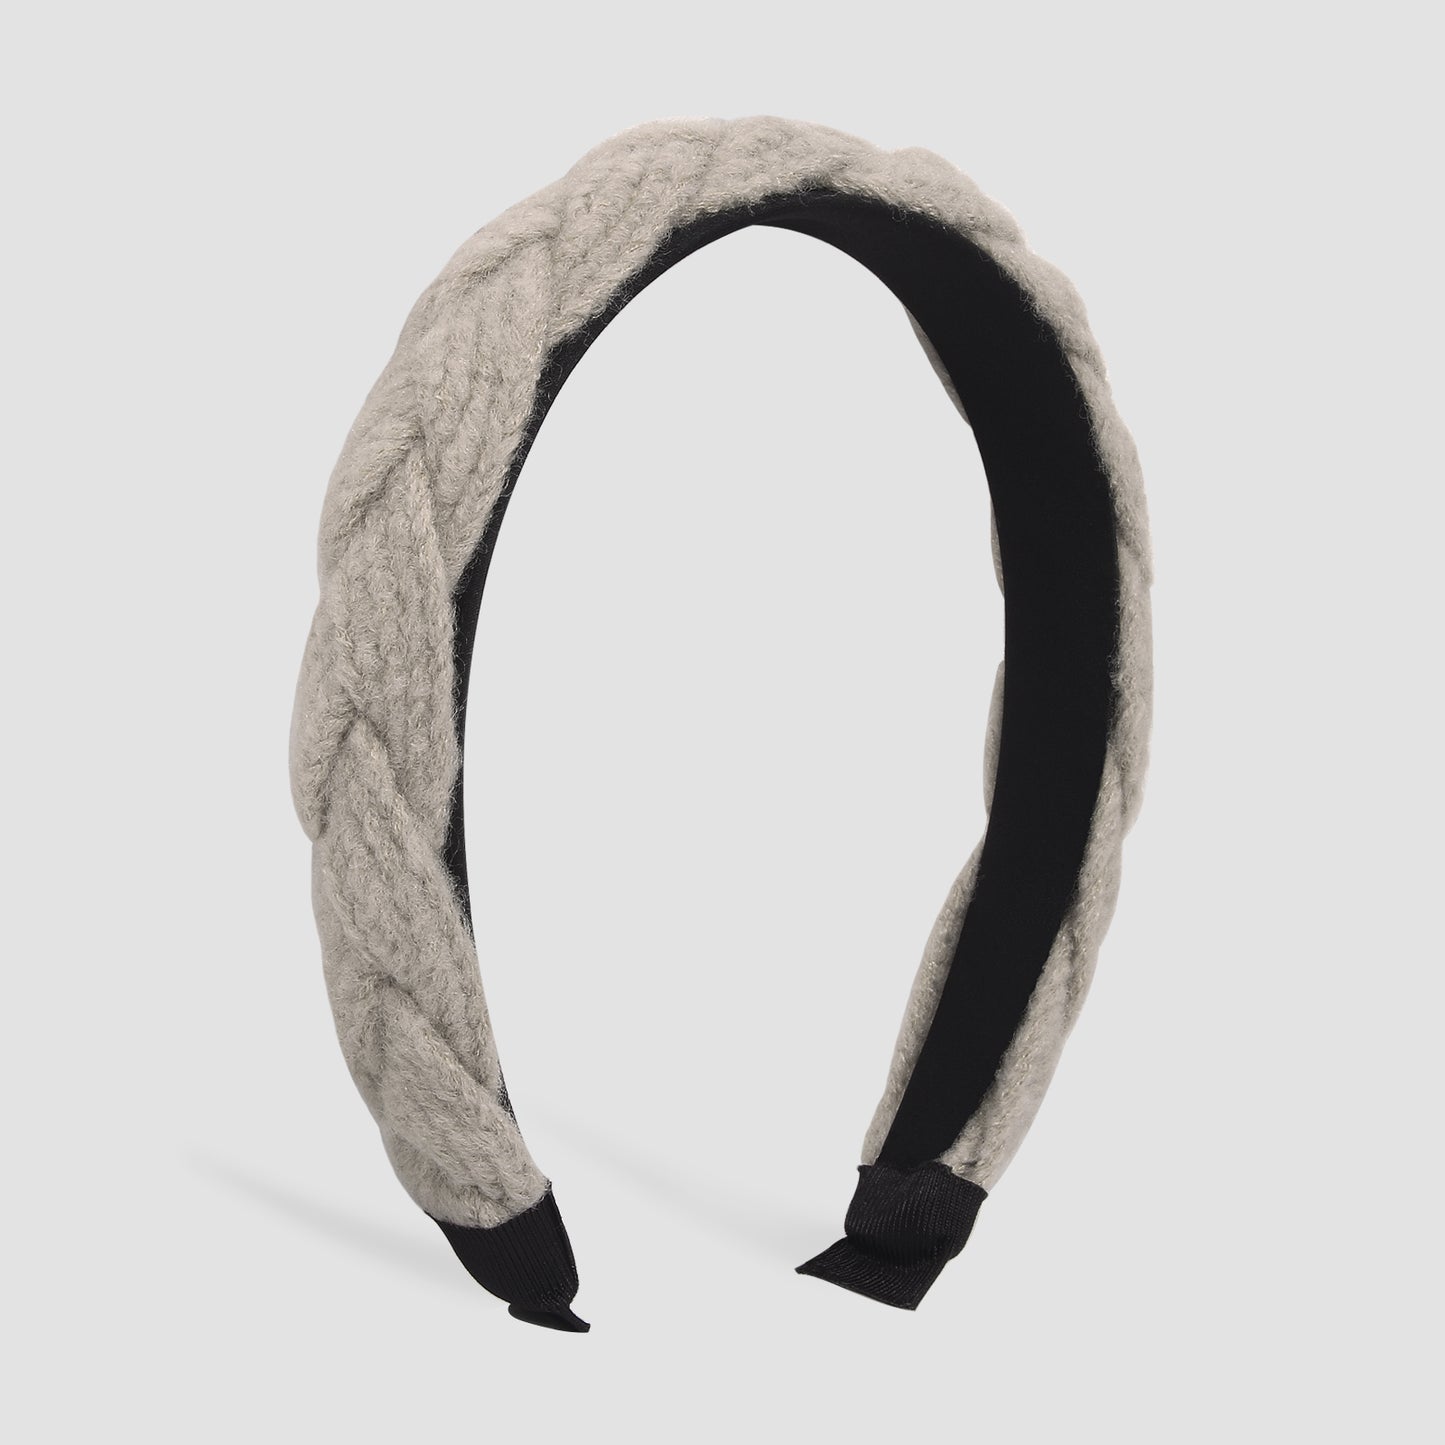 Exquisite Fall Winter Braided Fabric Headband medyjewelry